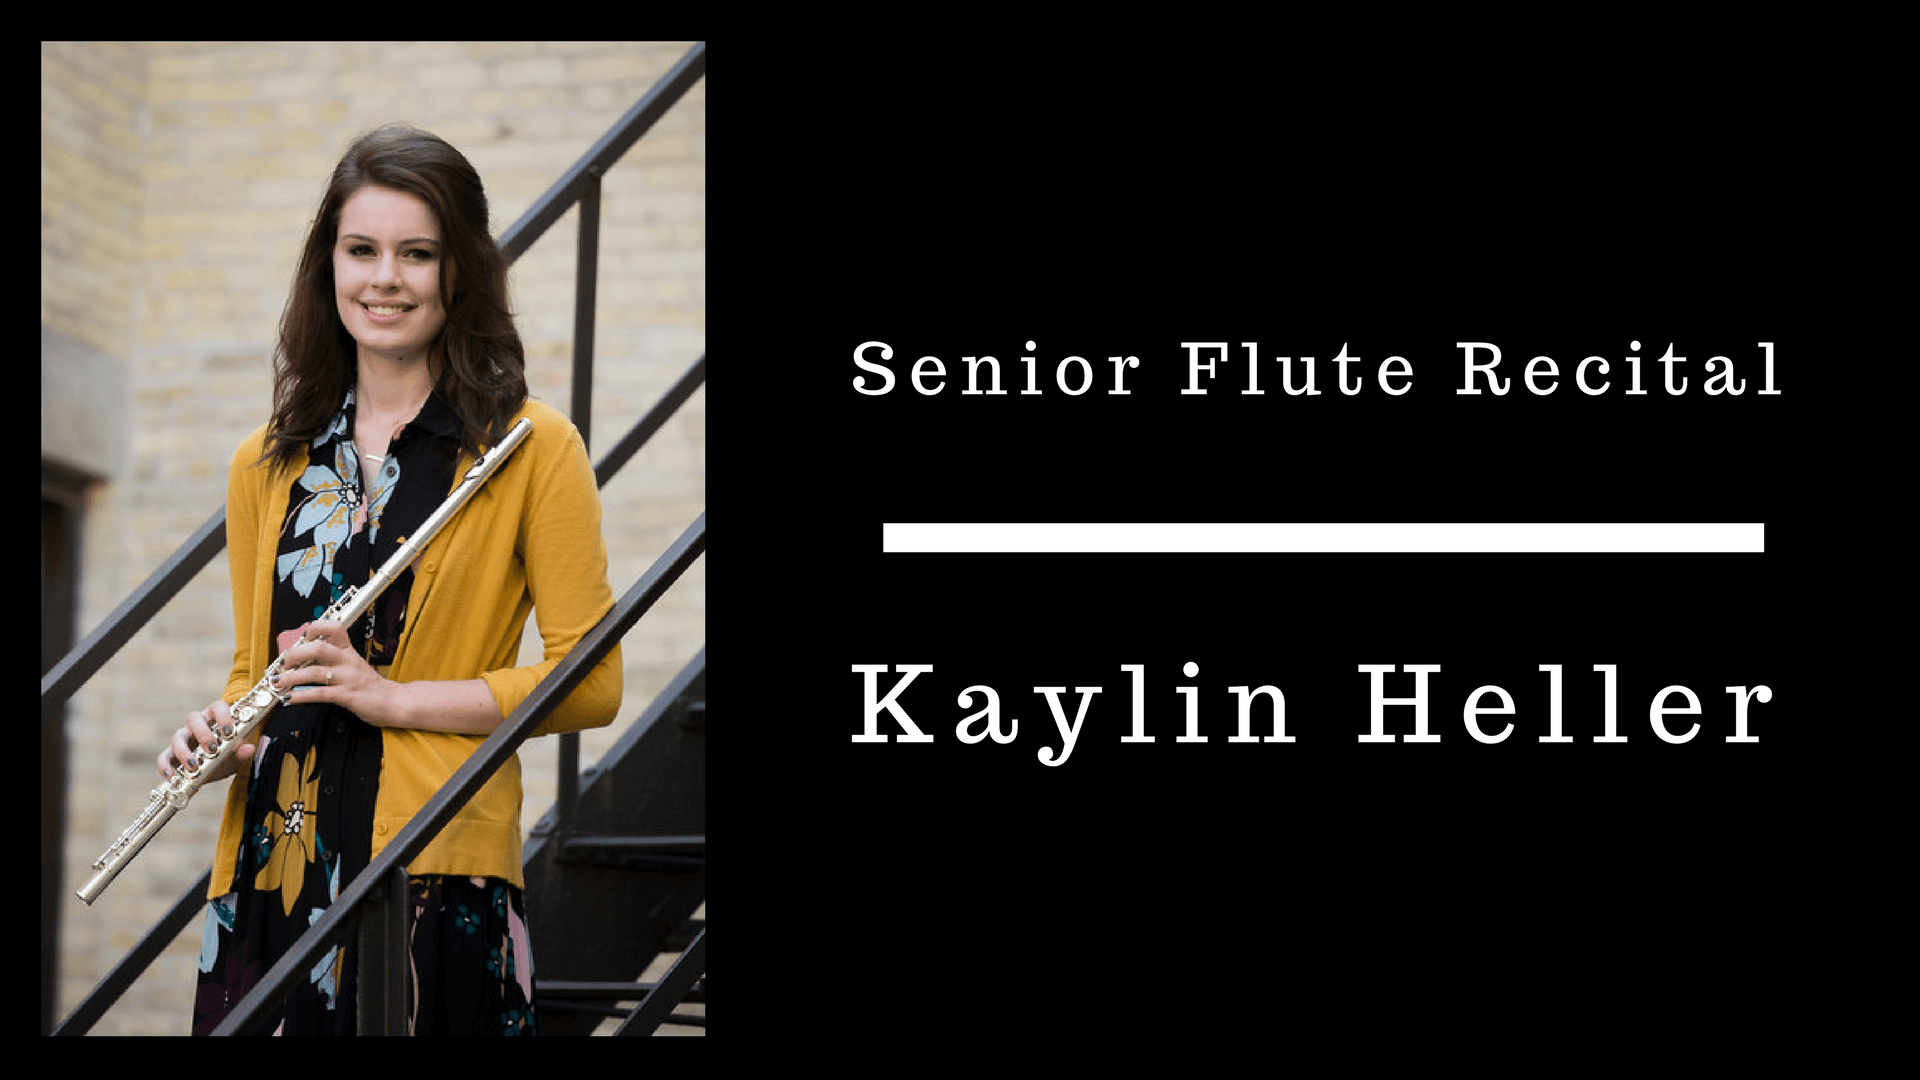 Kaylin Heller: Senior Flute Recital Excerpts